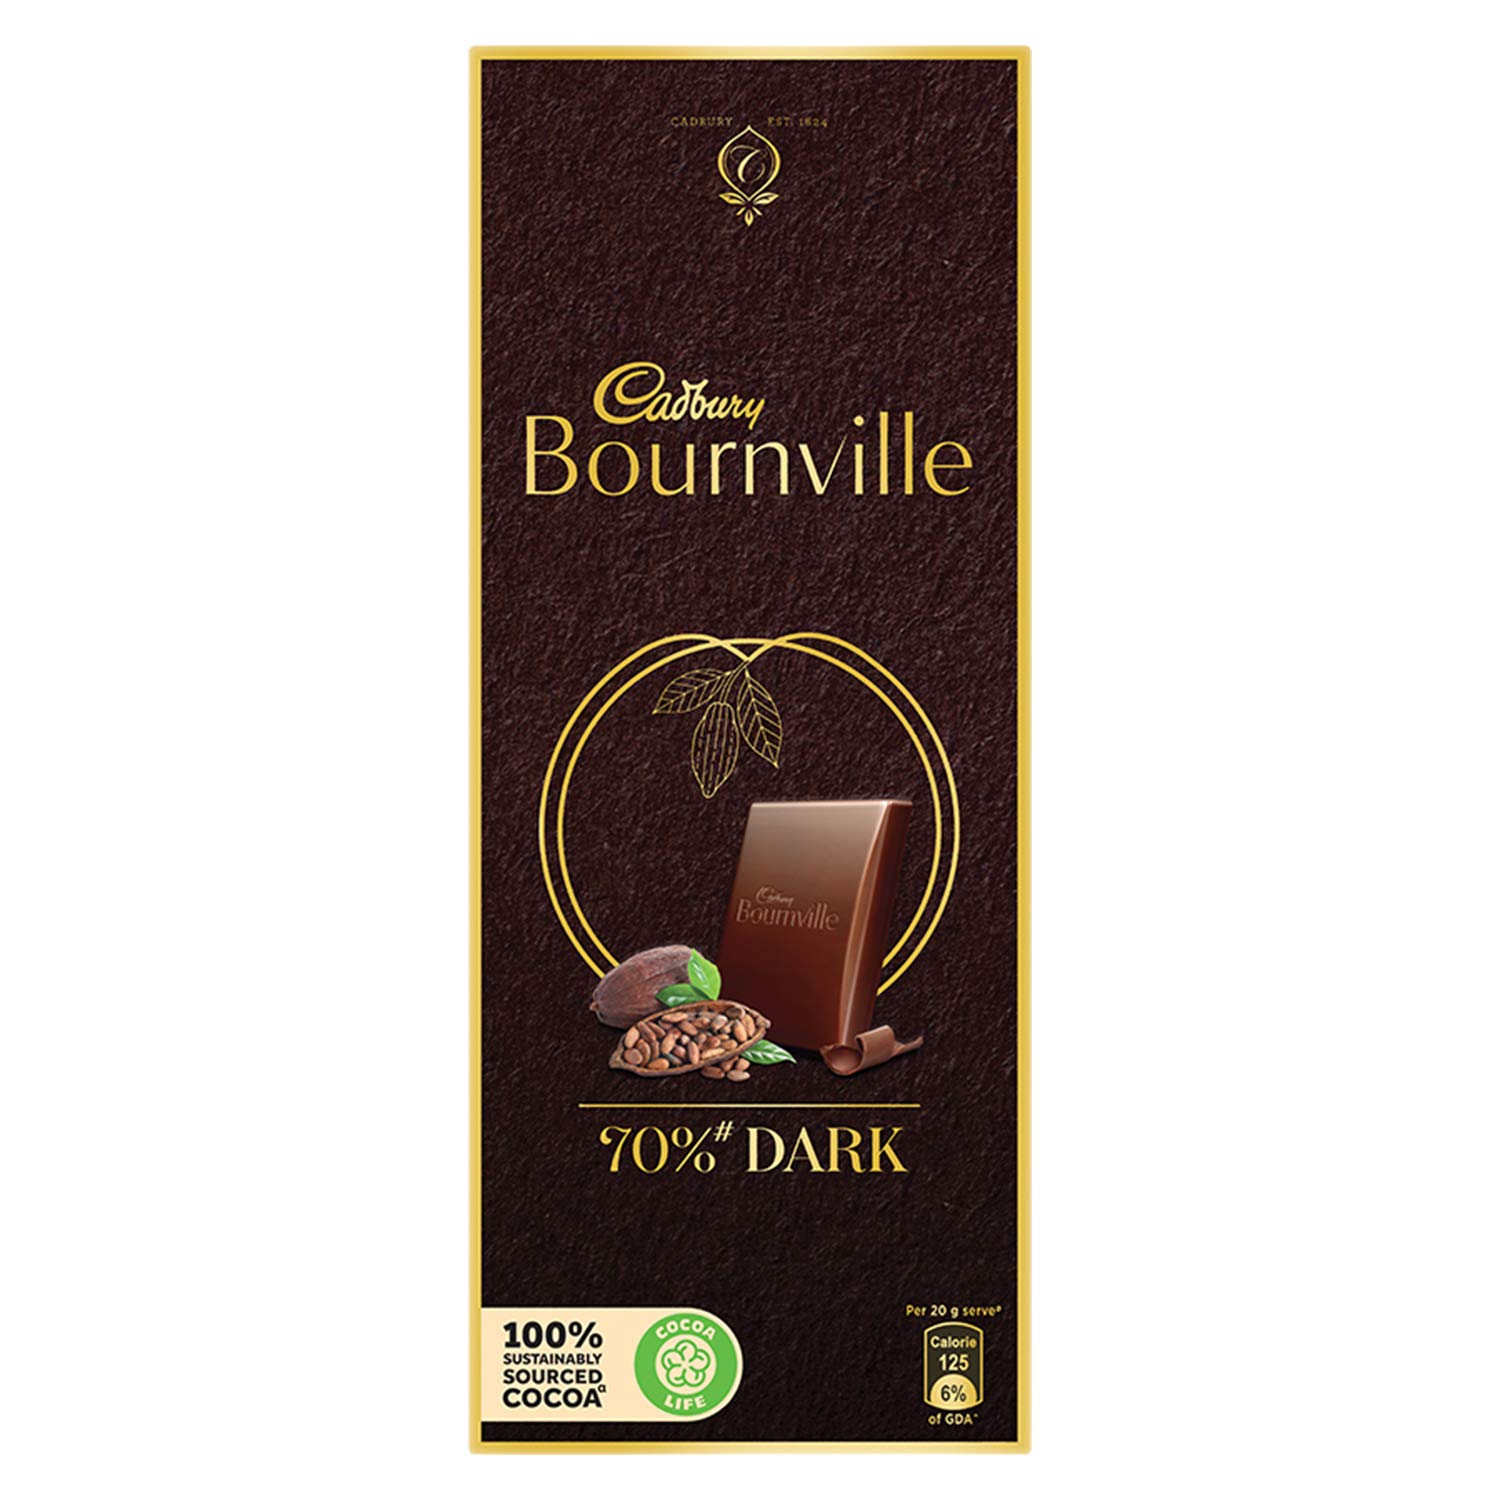 Cadbury Bournville Rich Cocoa 70 Dark Chocolate Bar